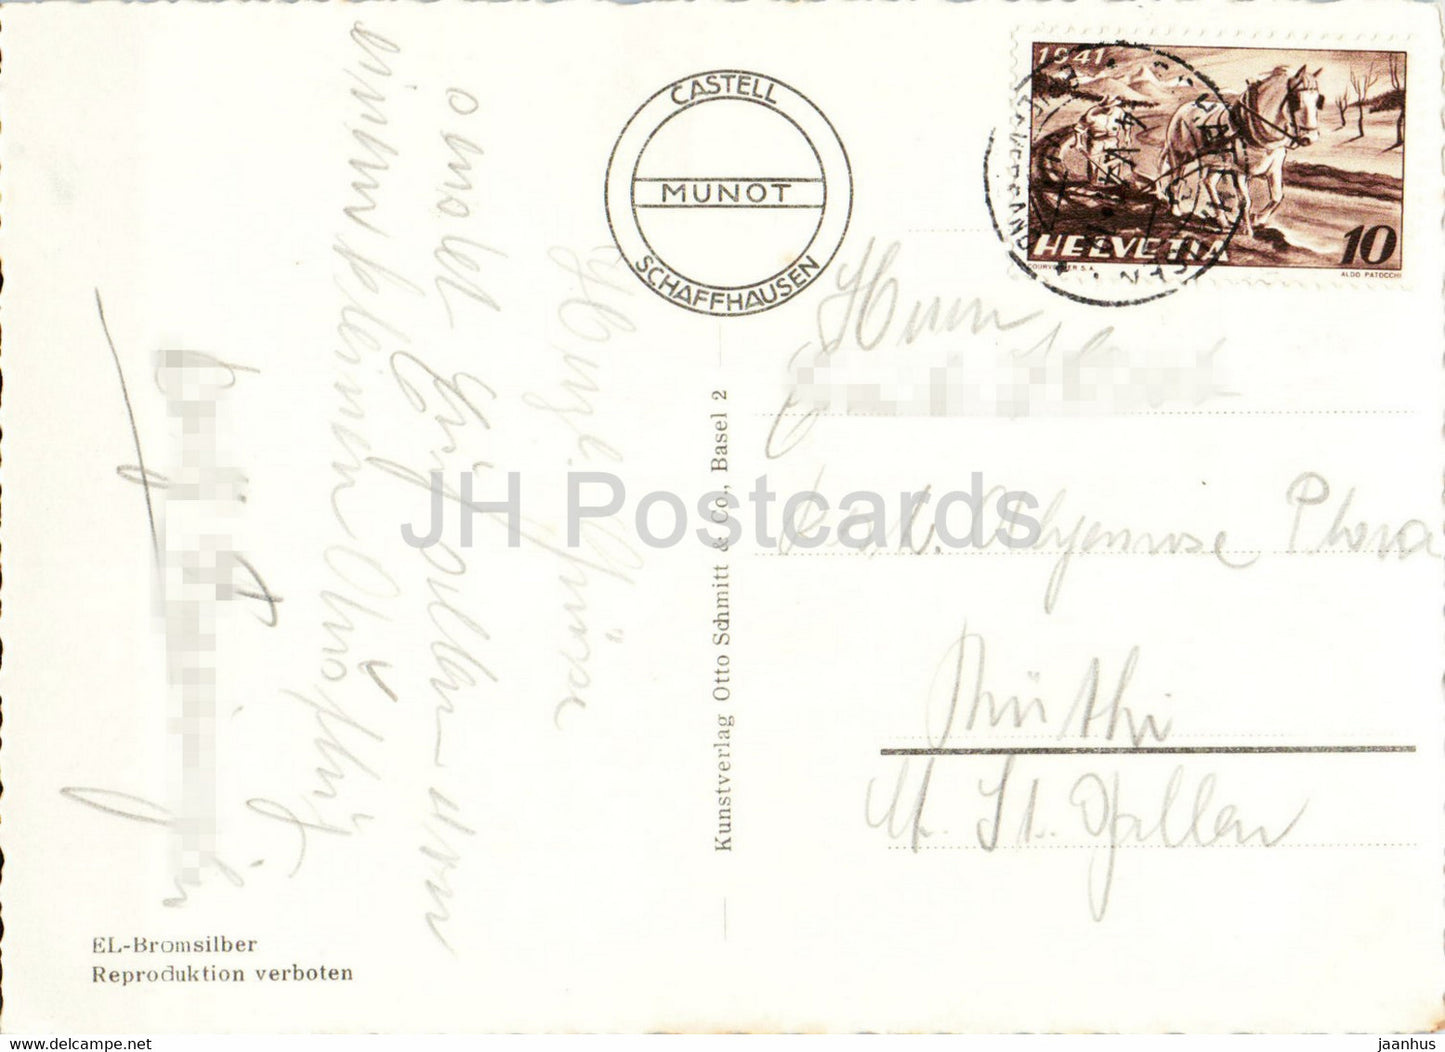 Schaffhouse - Munot - 1941 - carte postale ancienne - Suisse - d'occasion